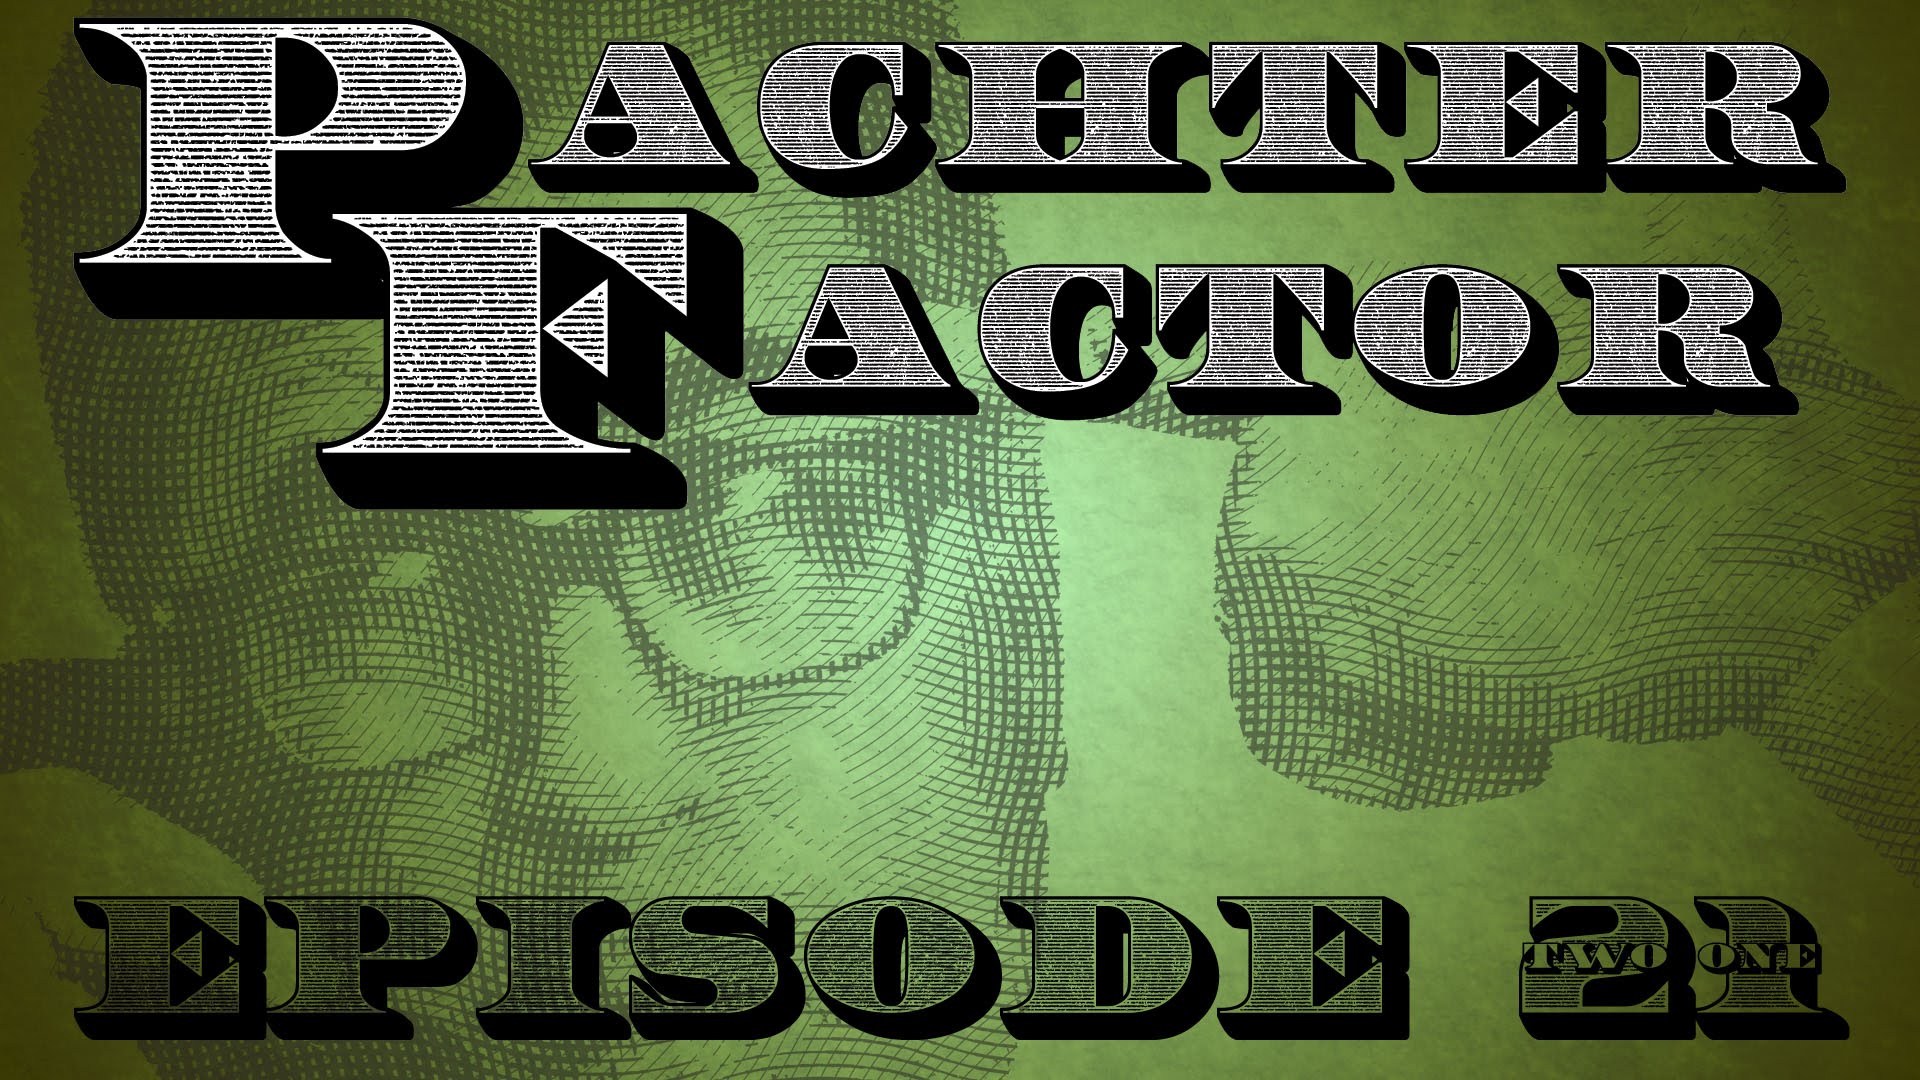 Pachter Factor episodio 21